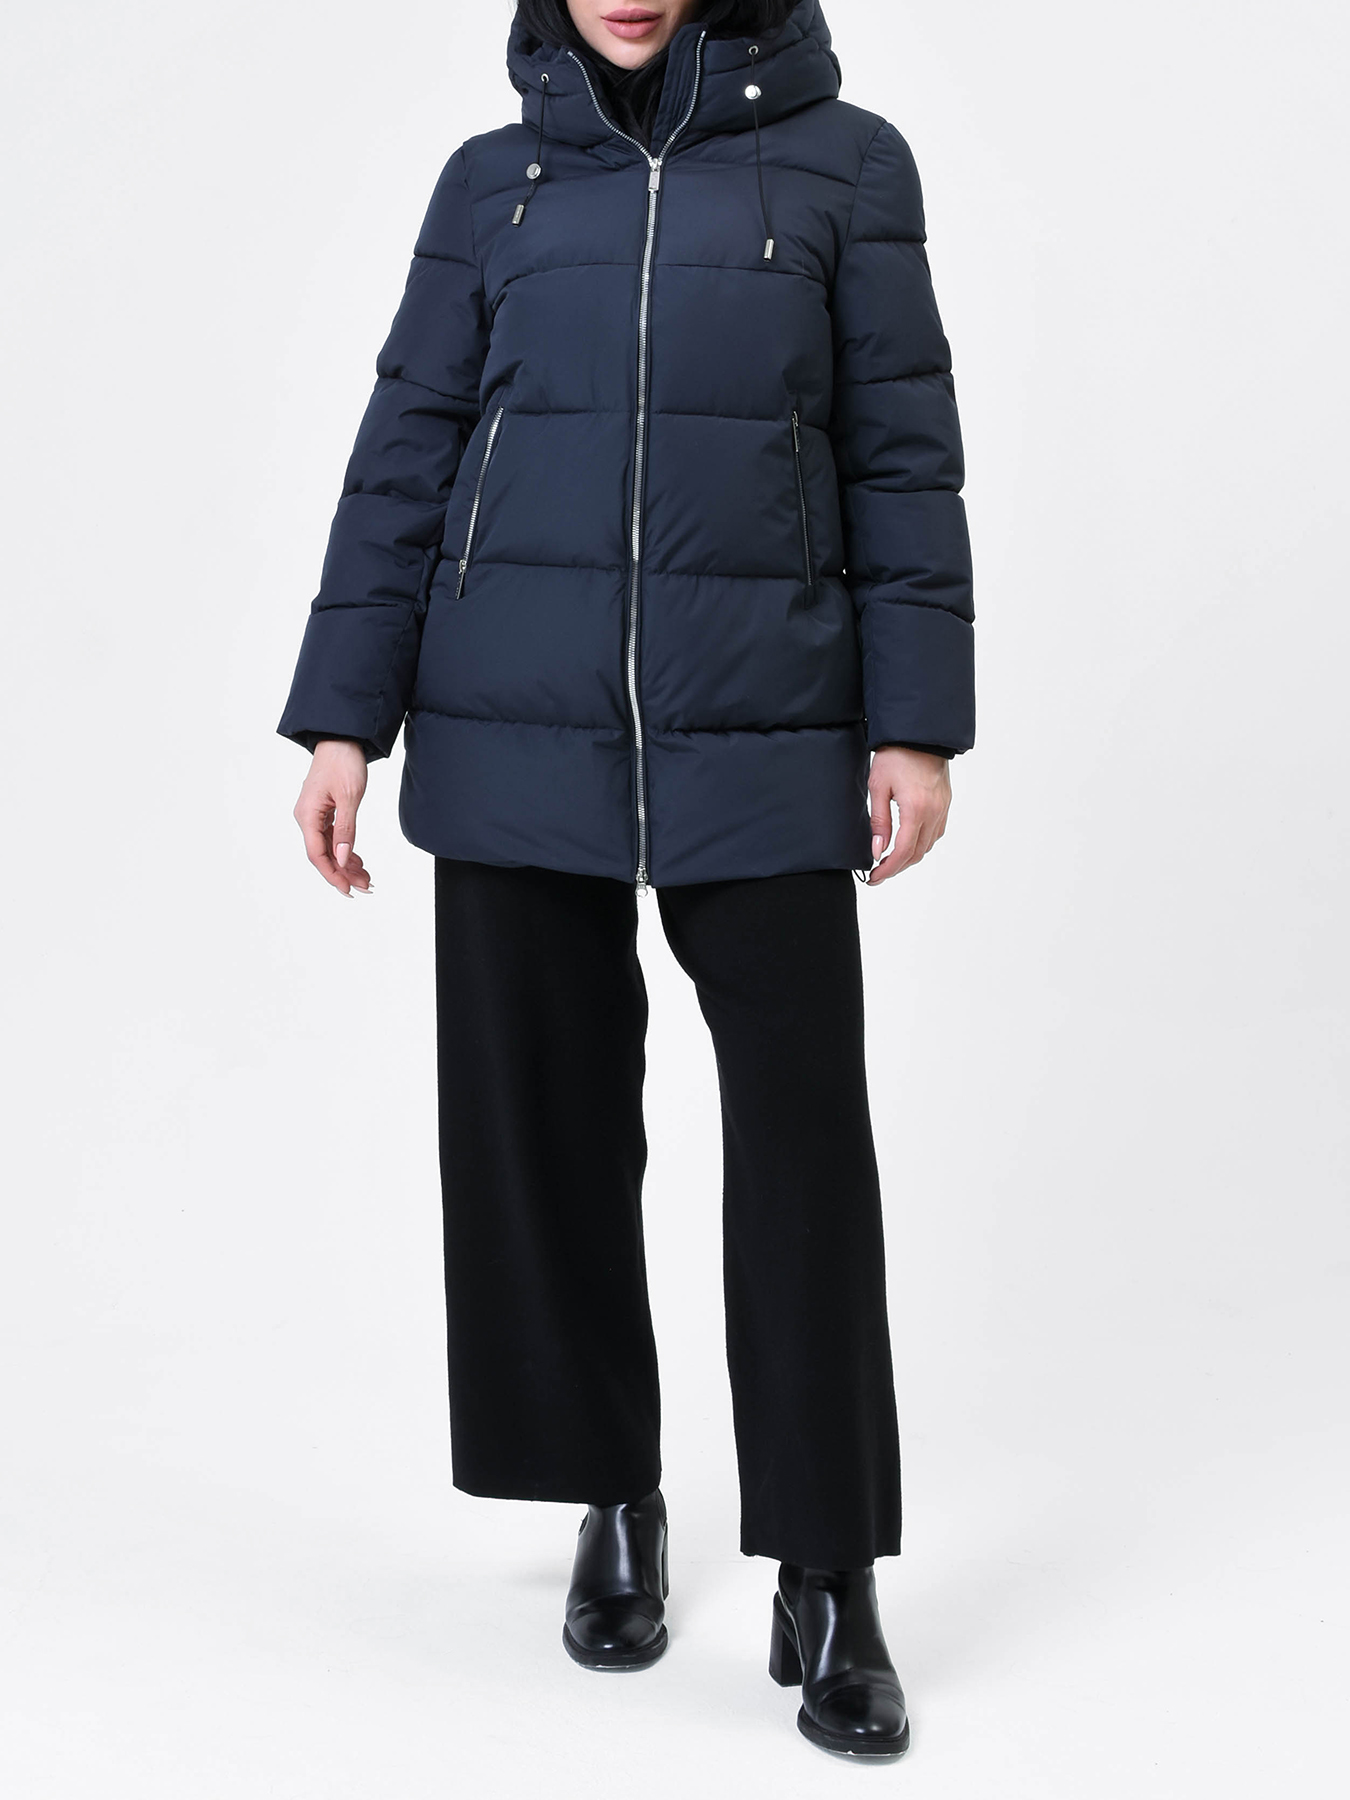 Пальто зимнее Maritta 433612-020, цвет темно-синий, размер 44 - фото 4